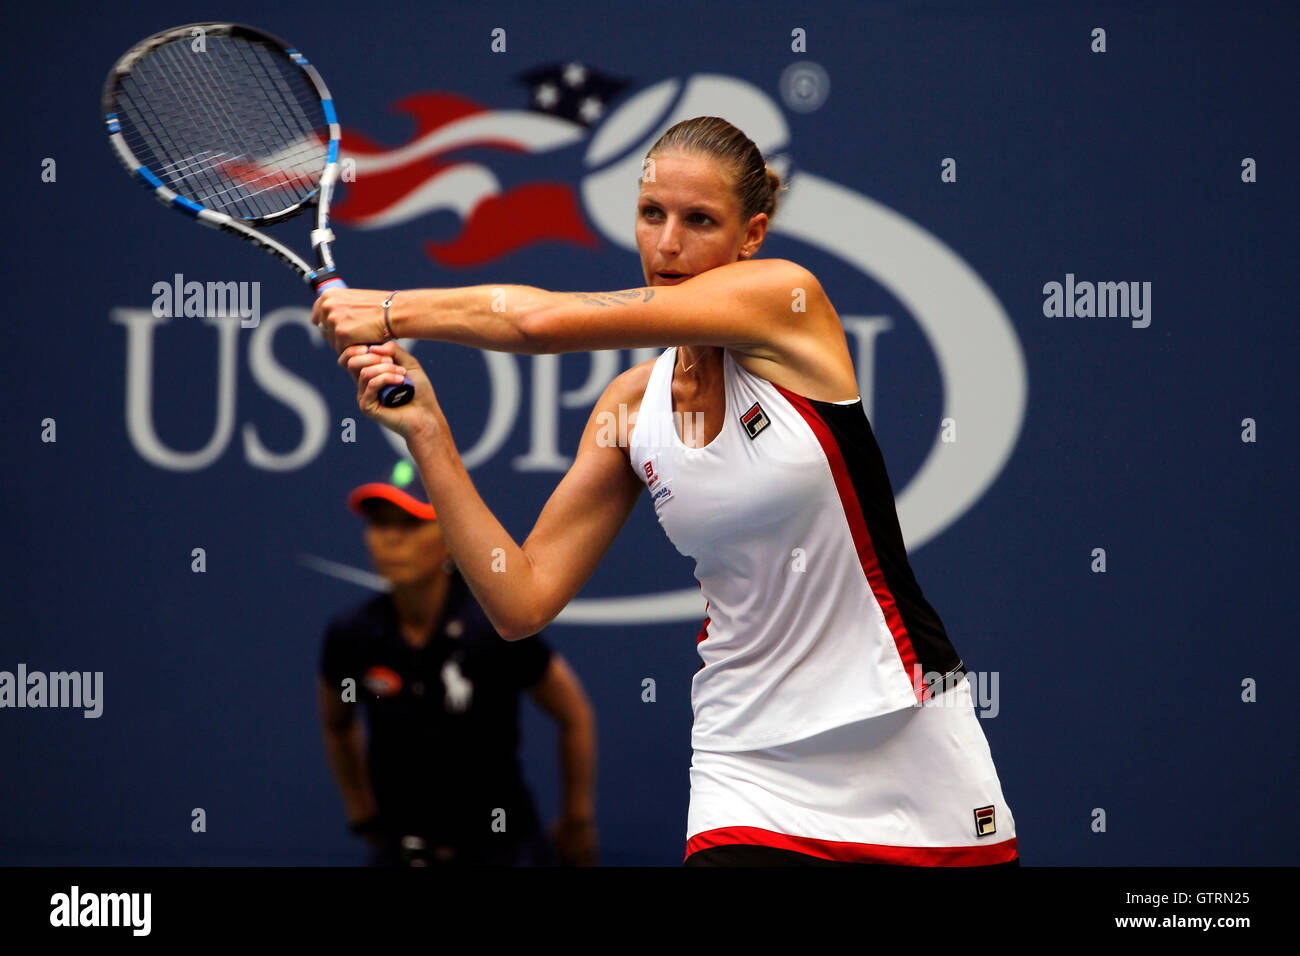 Karolina pliskova tennis hi-res stock photography and images - Alamy